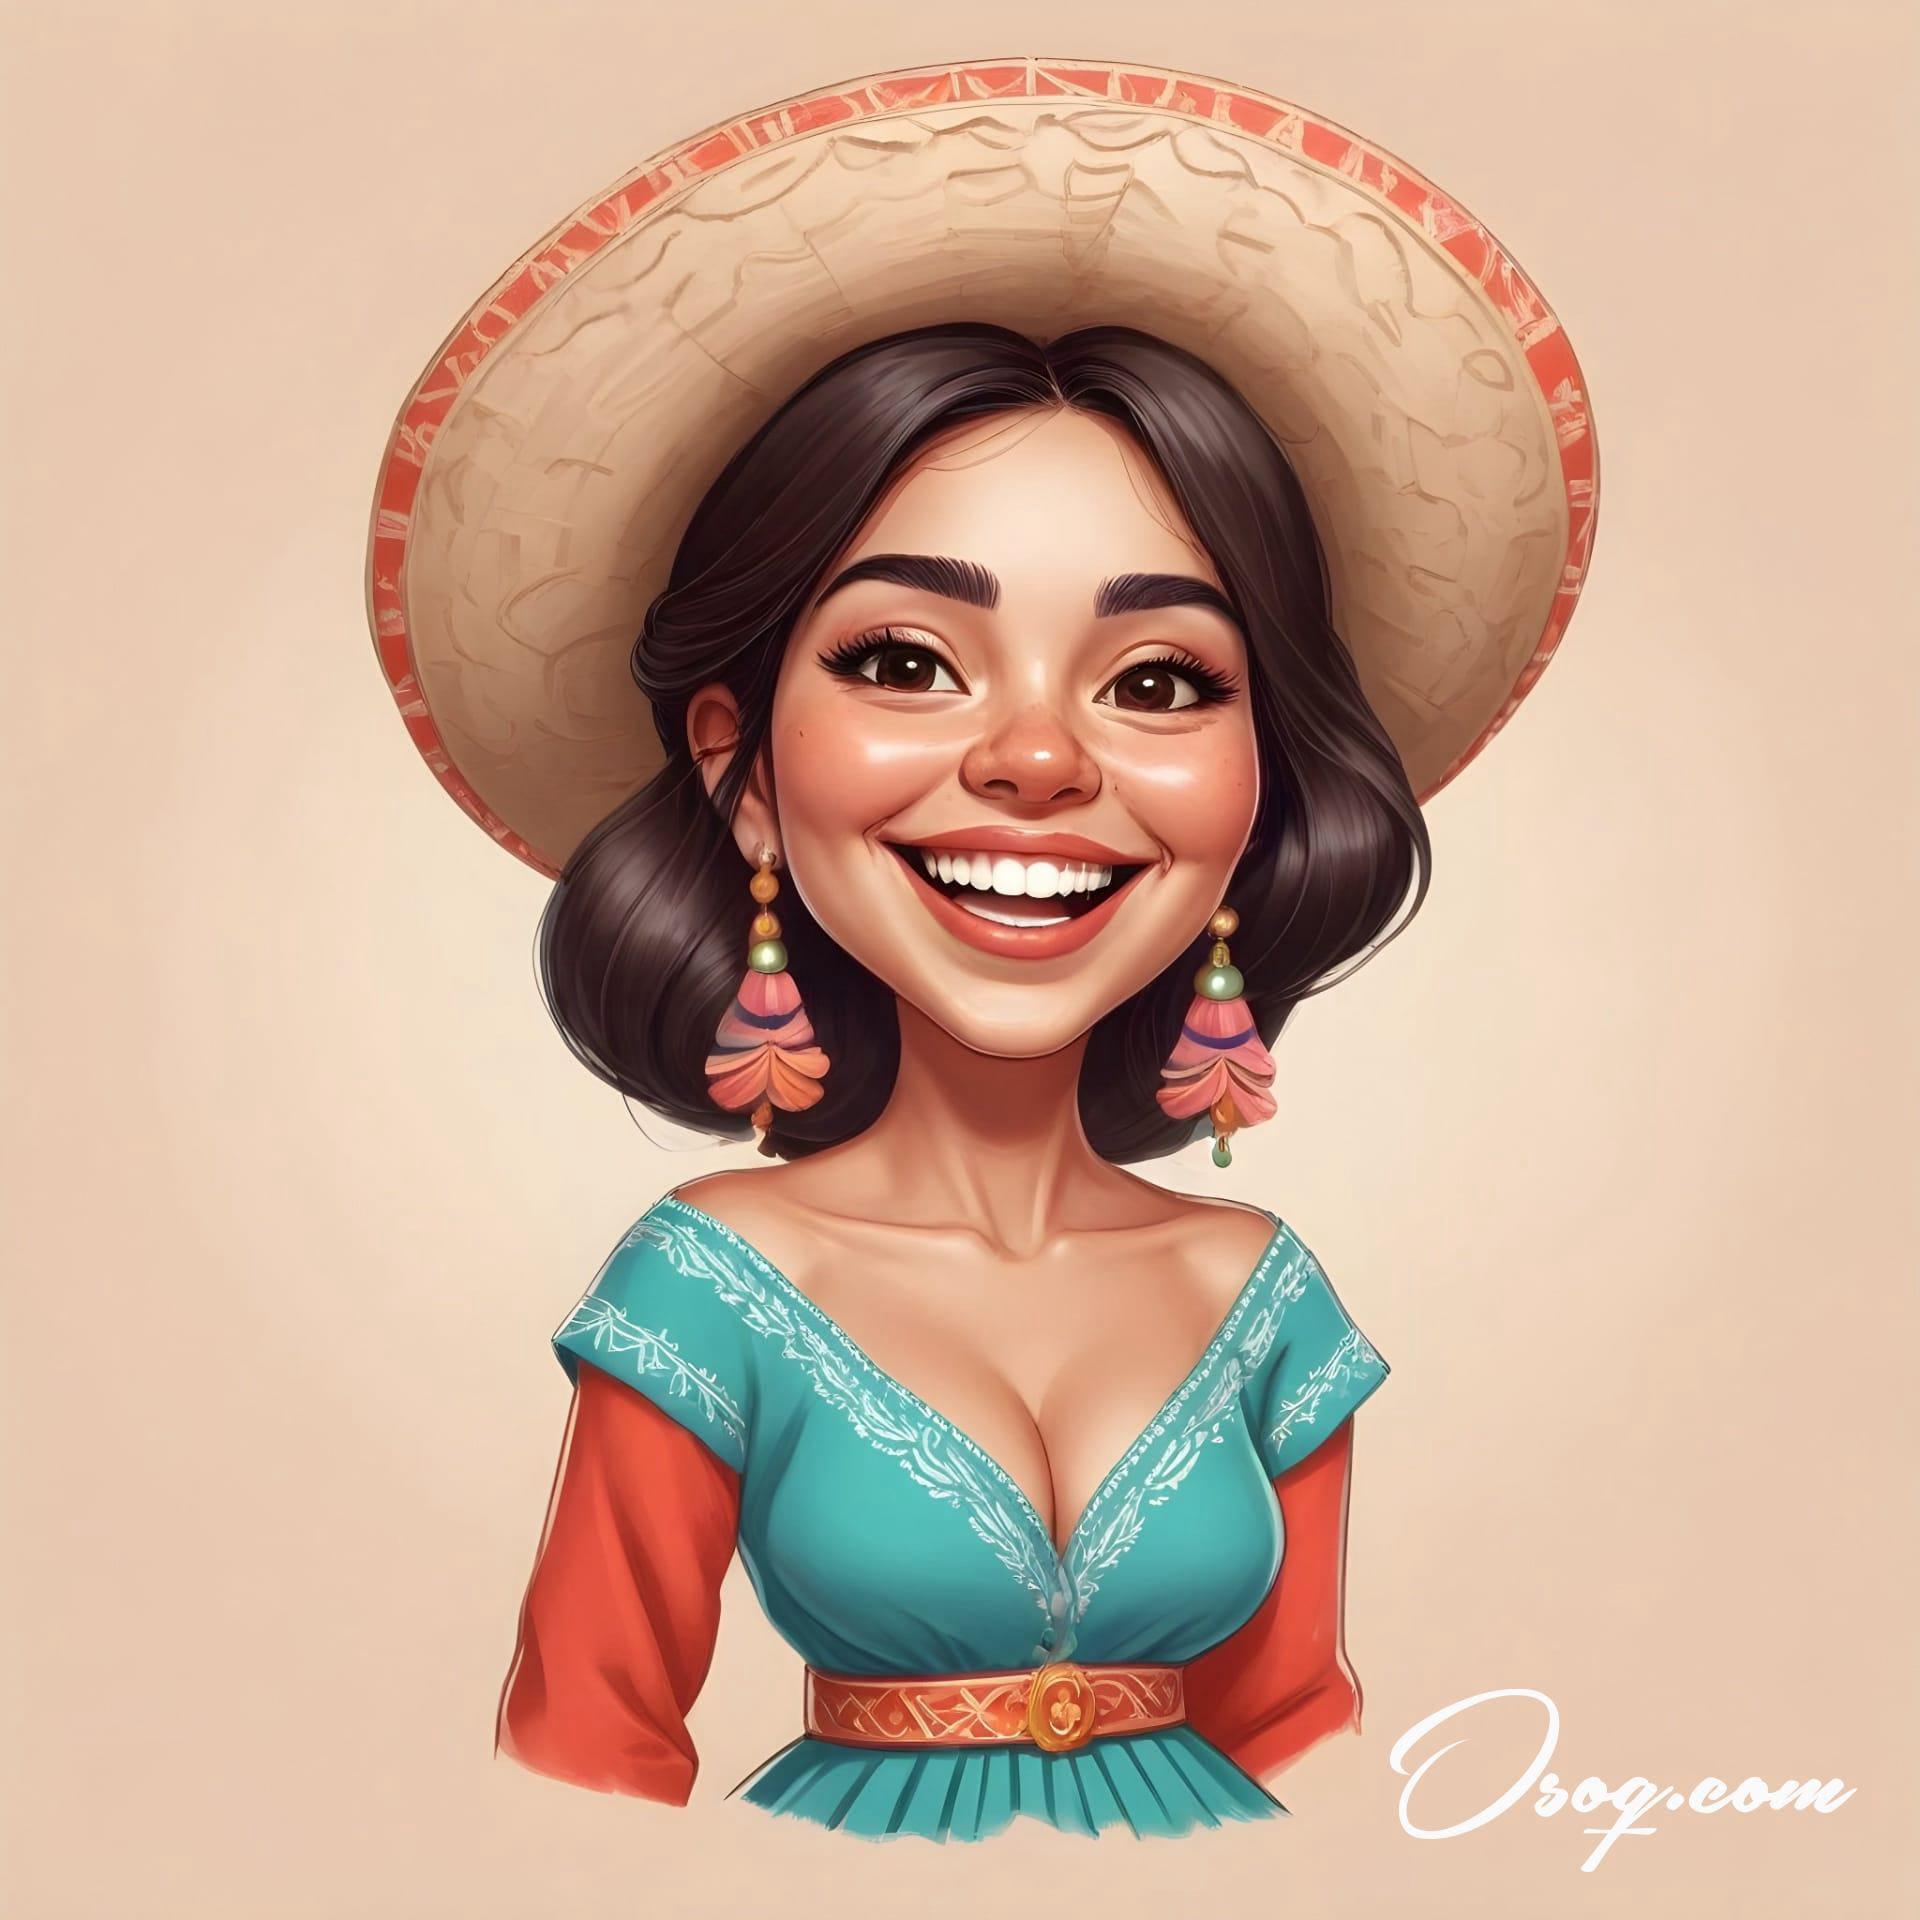 Mexican cartoon 12